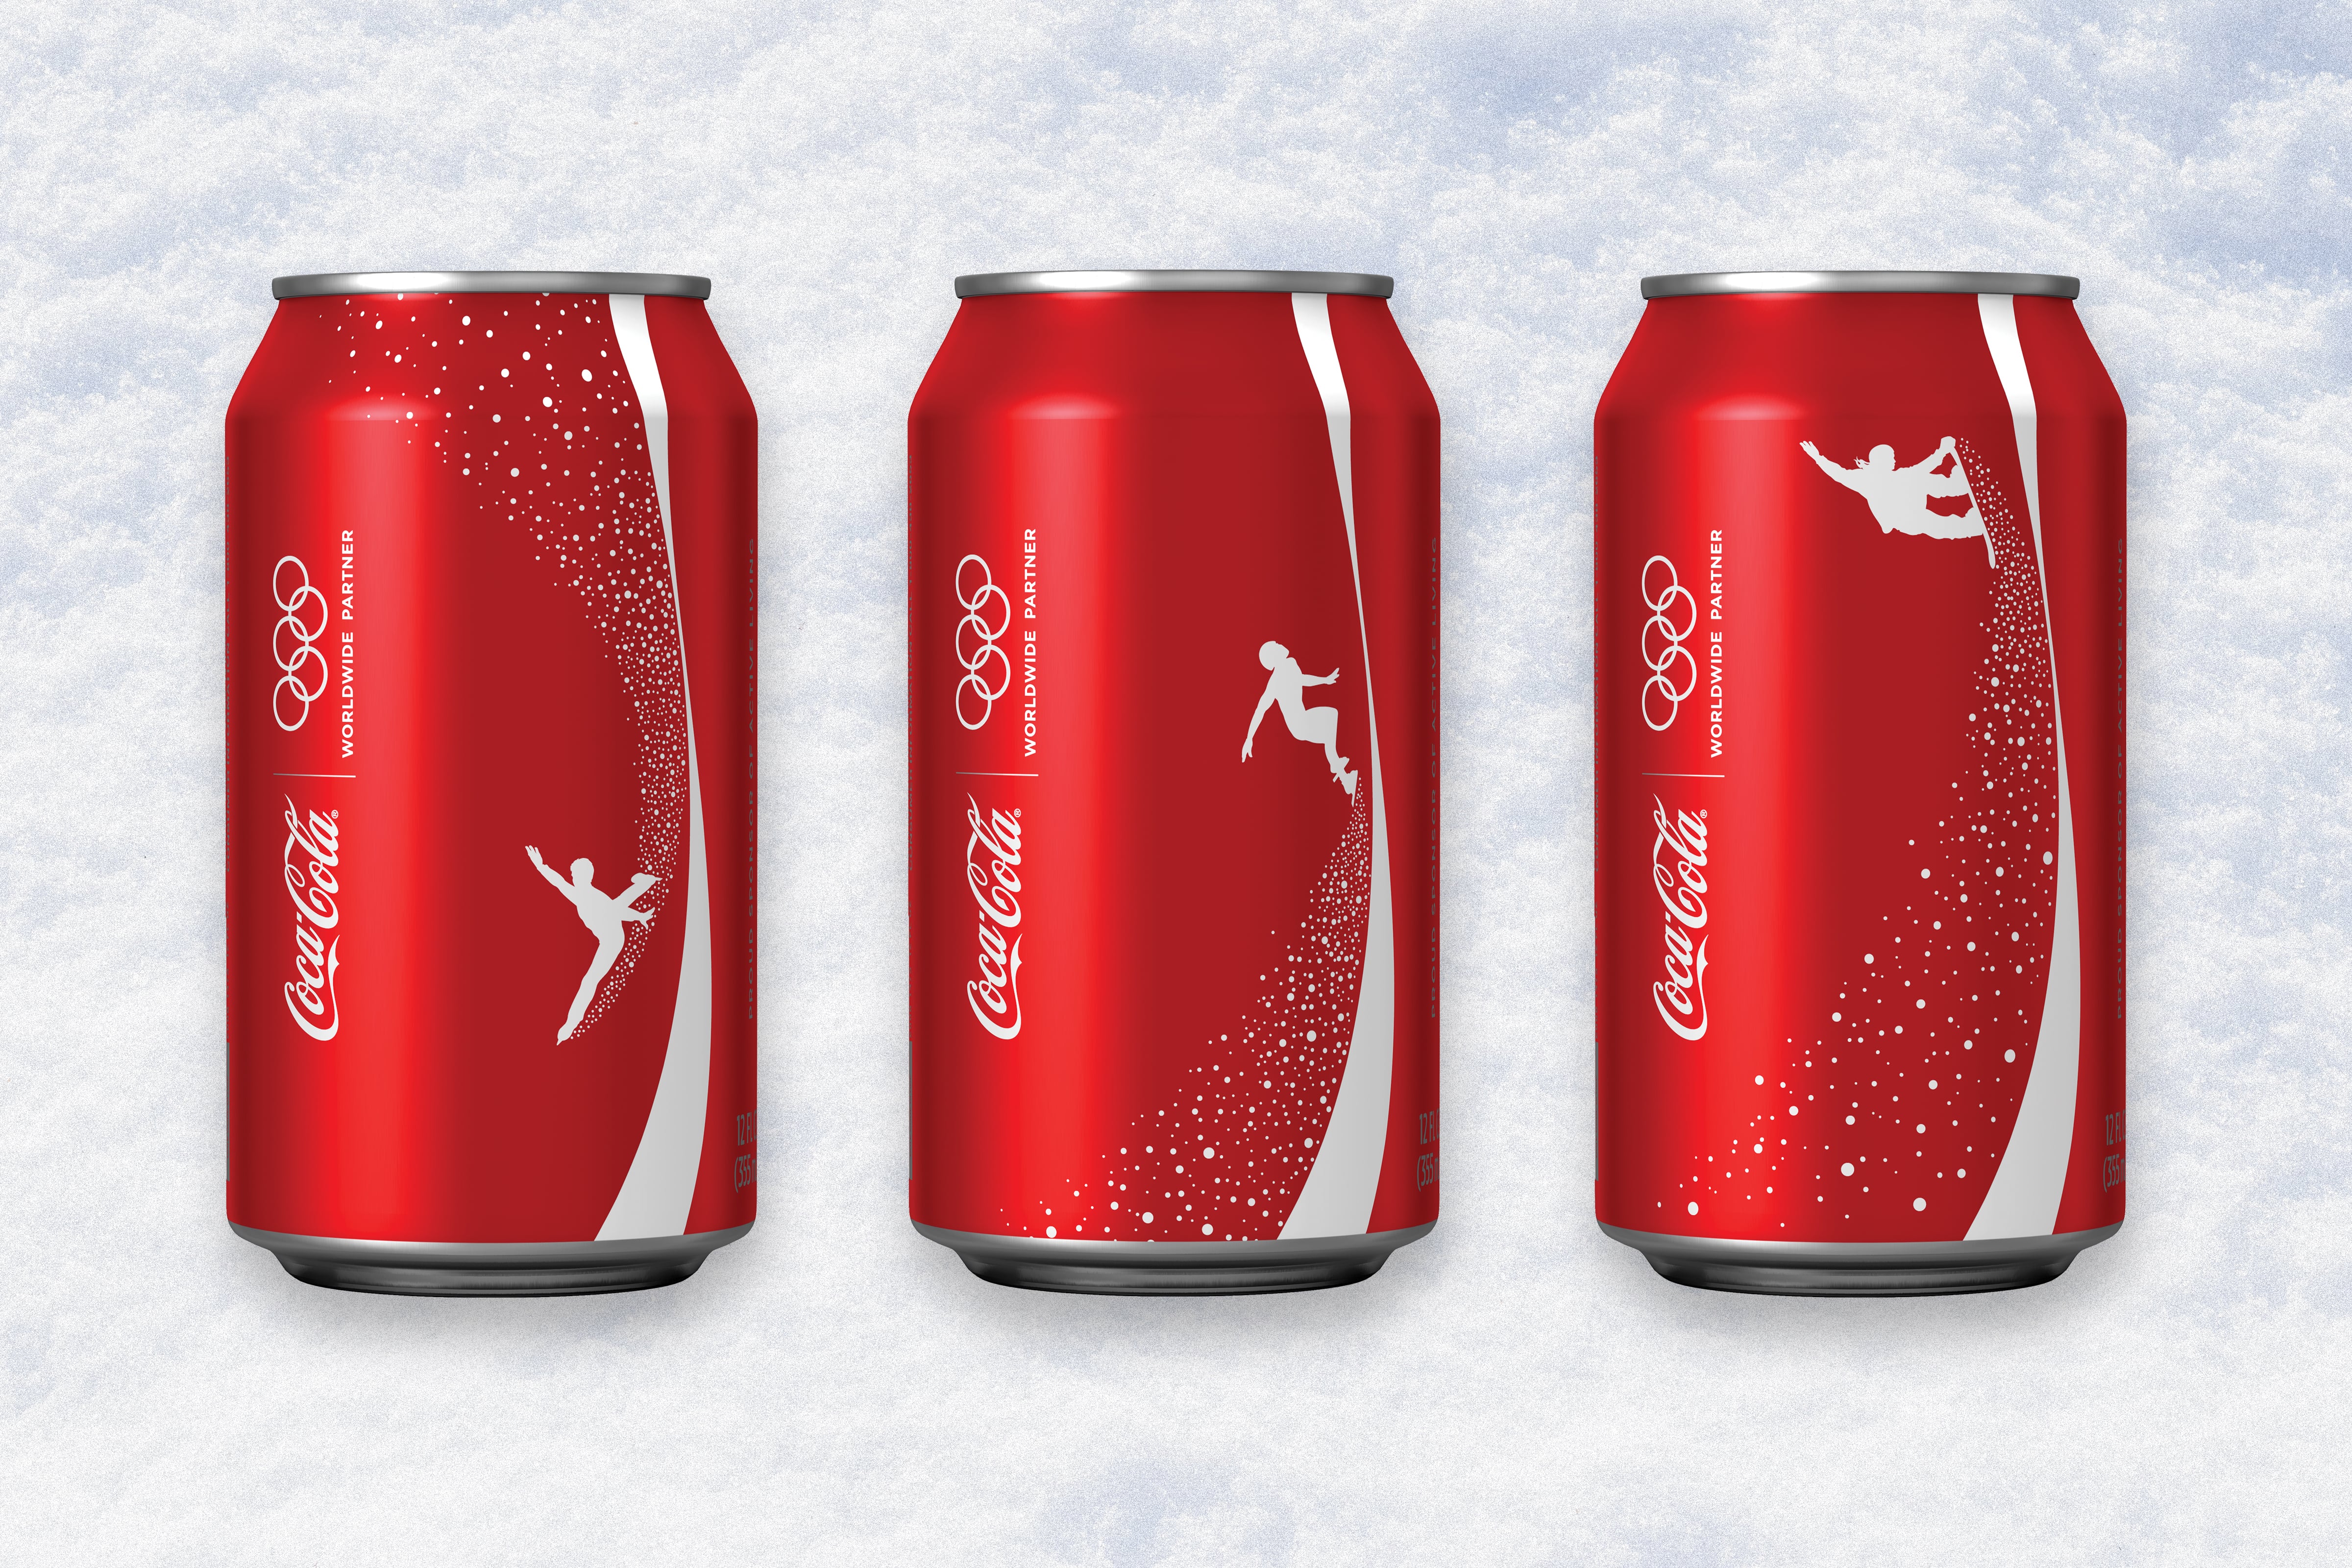 Newsarticle - Coca Cola And Turner Duckworth Rebranded Sprite Heat